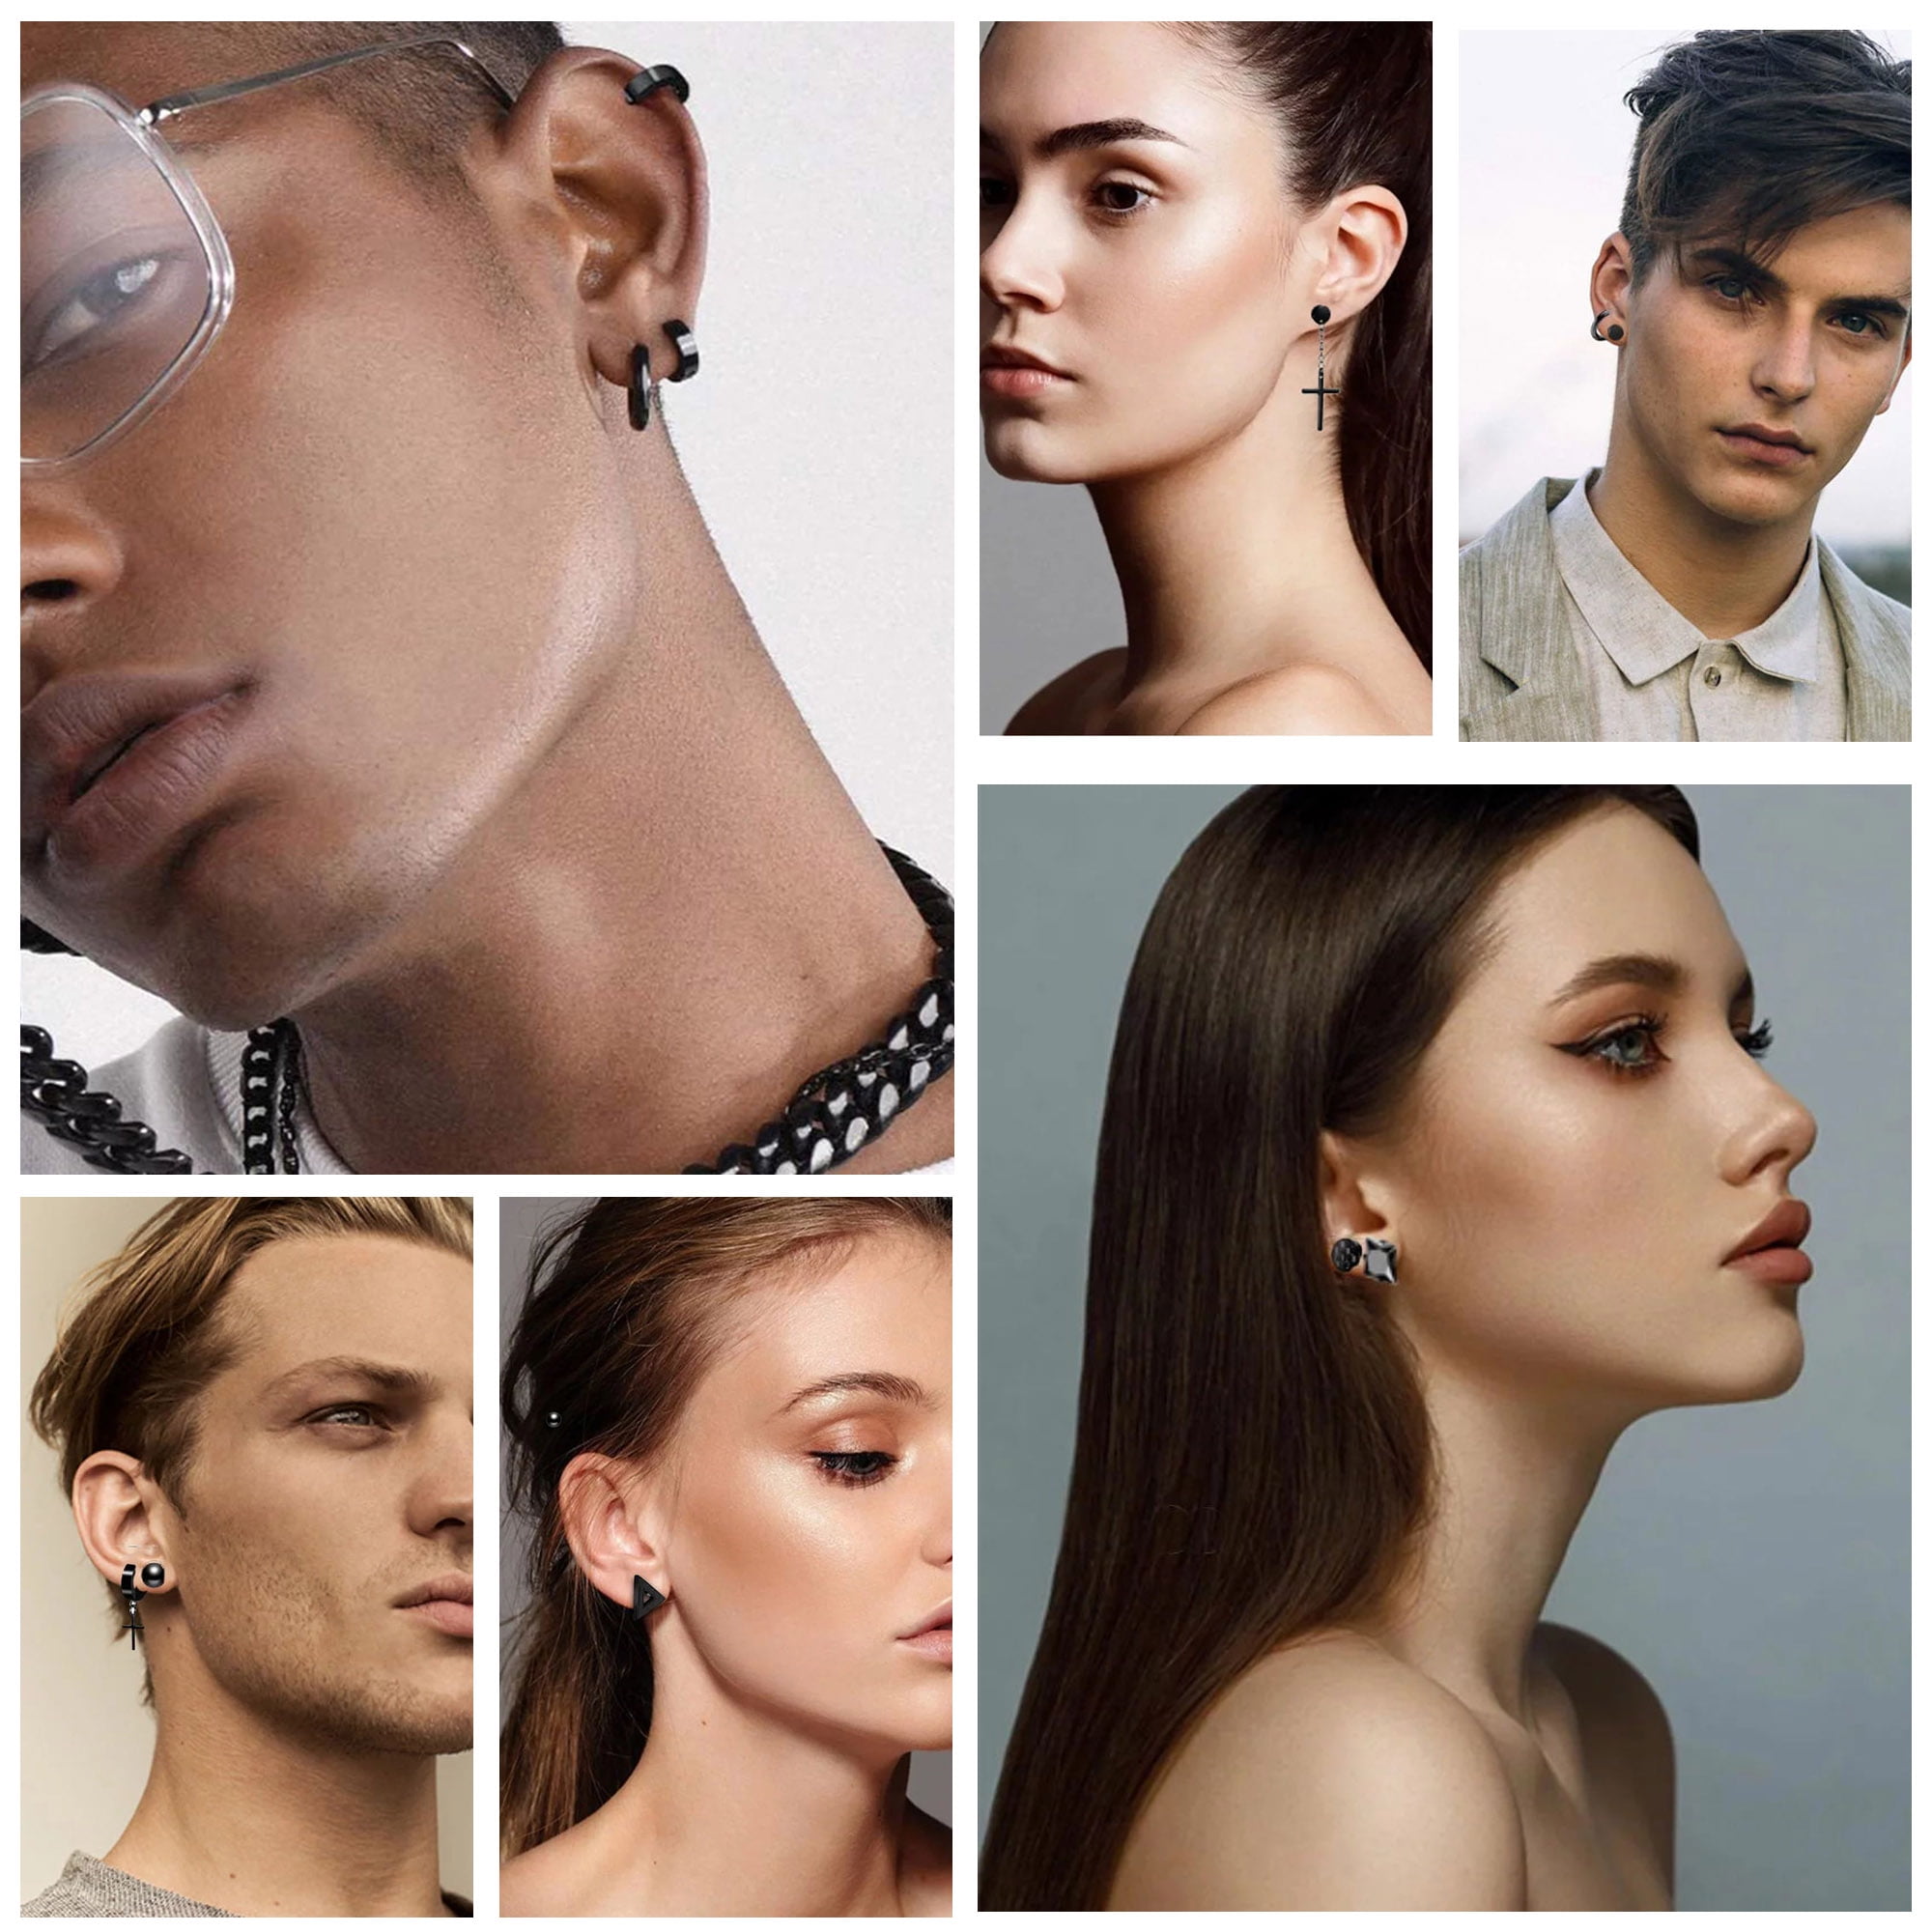 15 Pairs Earrings For Men Black Stud Earrings Mens Earrings Black Hoop  Earrings Stainless Steel Earrings Set Jewelry Piercings For Men Women  High-qual